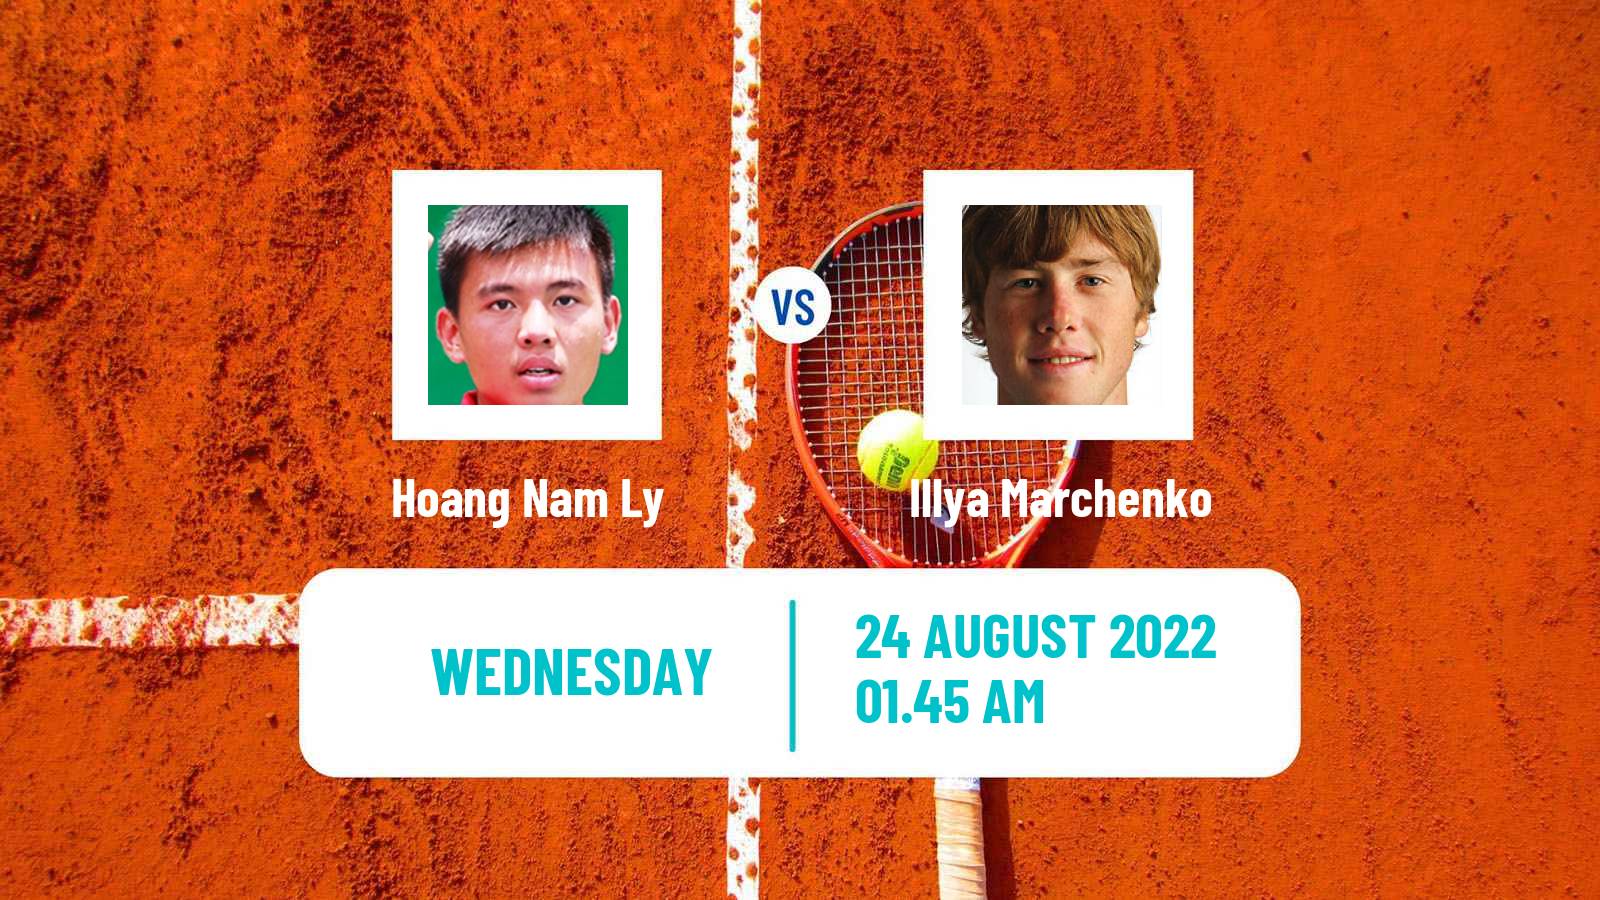 Tennis ATP Challenger Hoang Nam Ly - Illya Marchenko